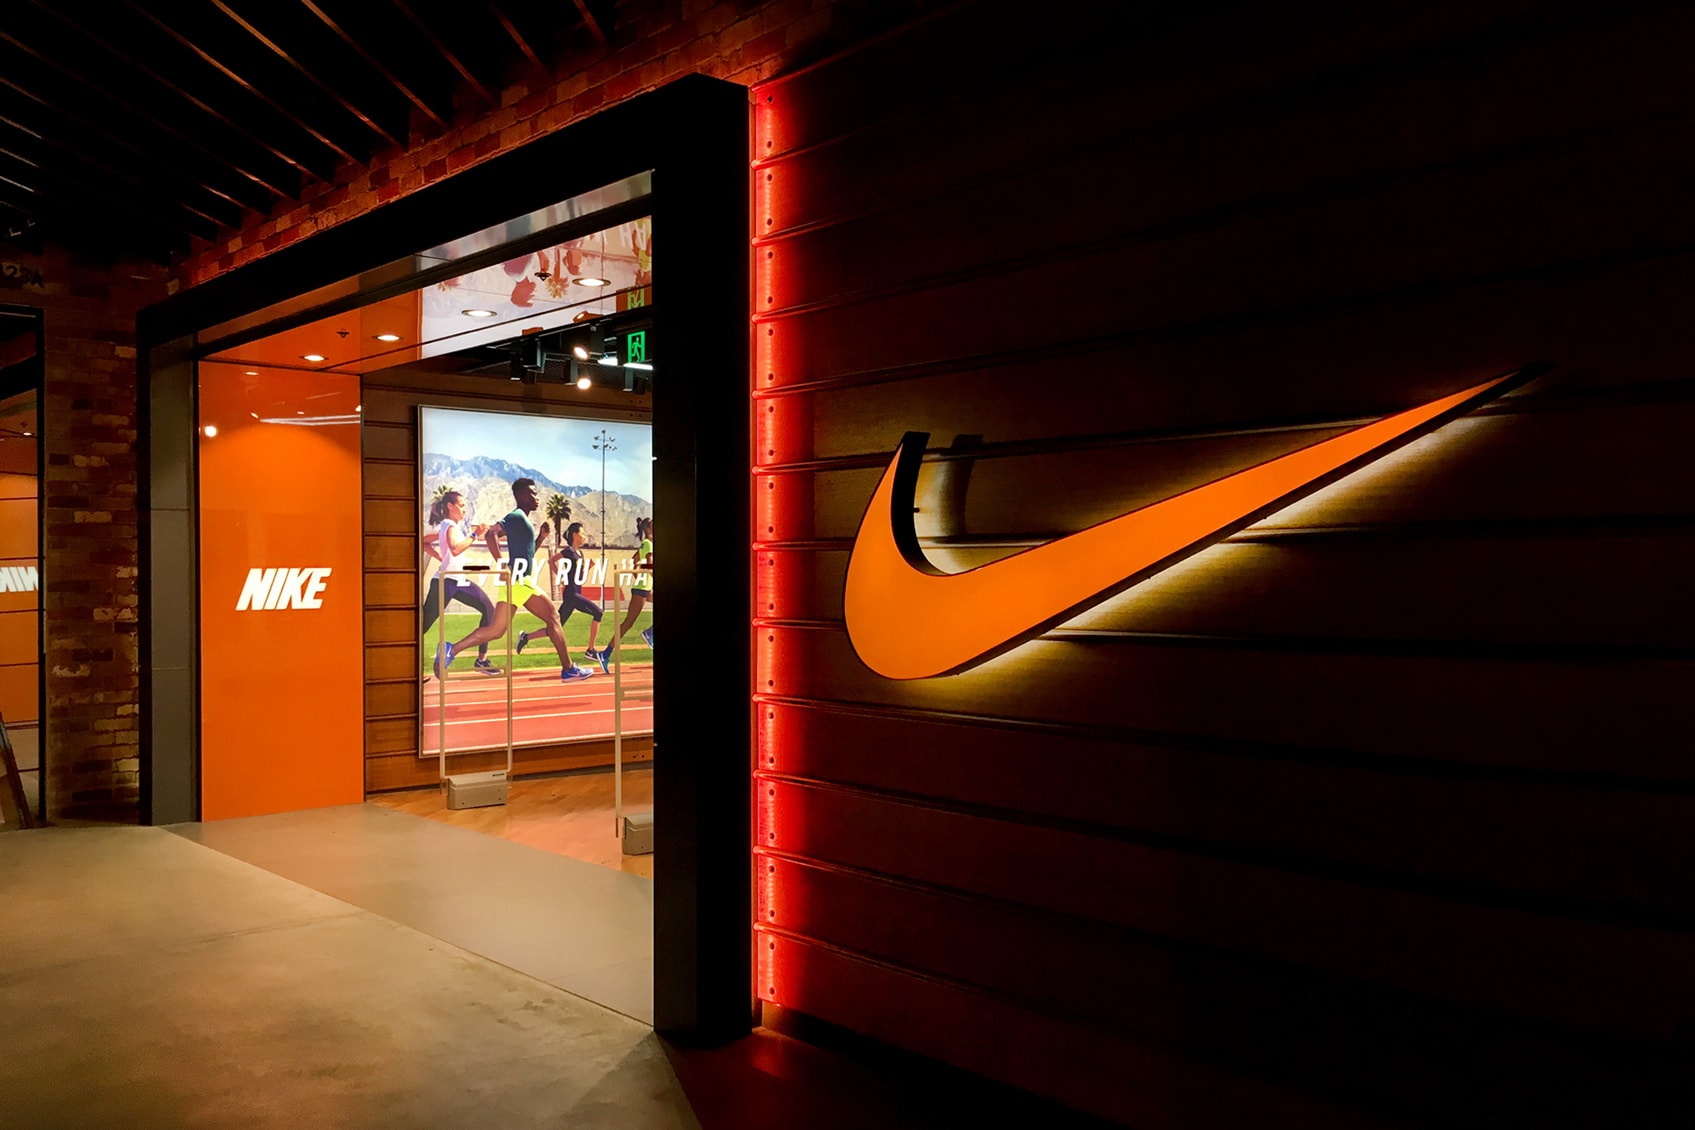 Ex Nike Executive David Reichert Wire Fraud JJL Sports Corp. Fan-a-Mania Prison Jail Fine Sentence Law Apparel Sales